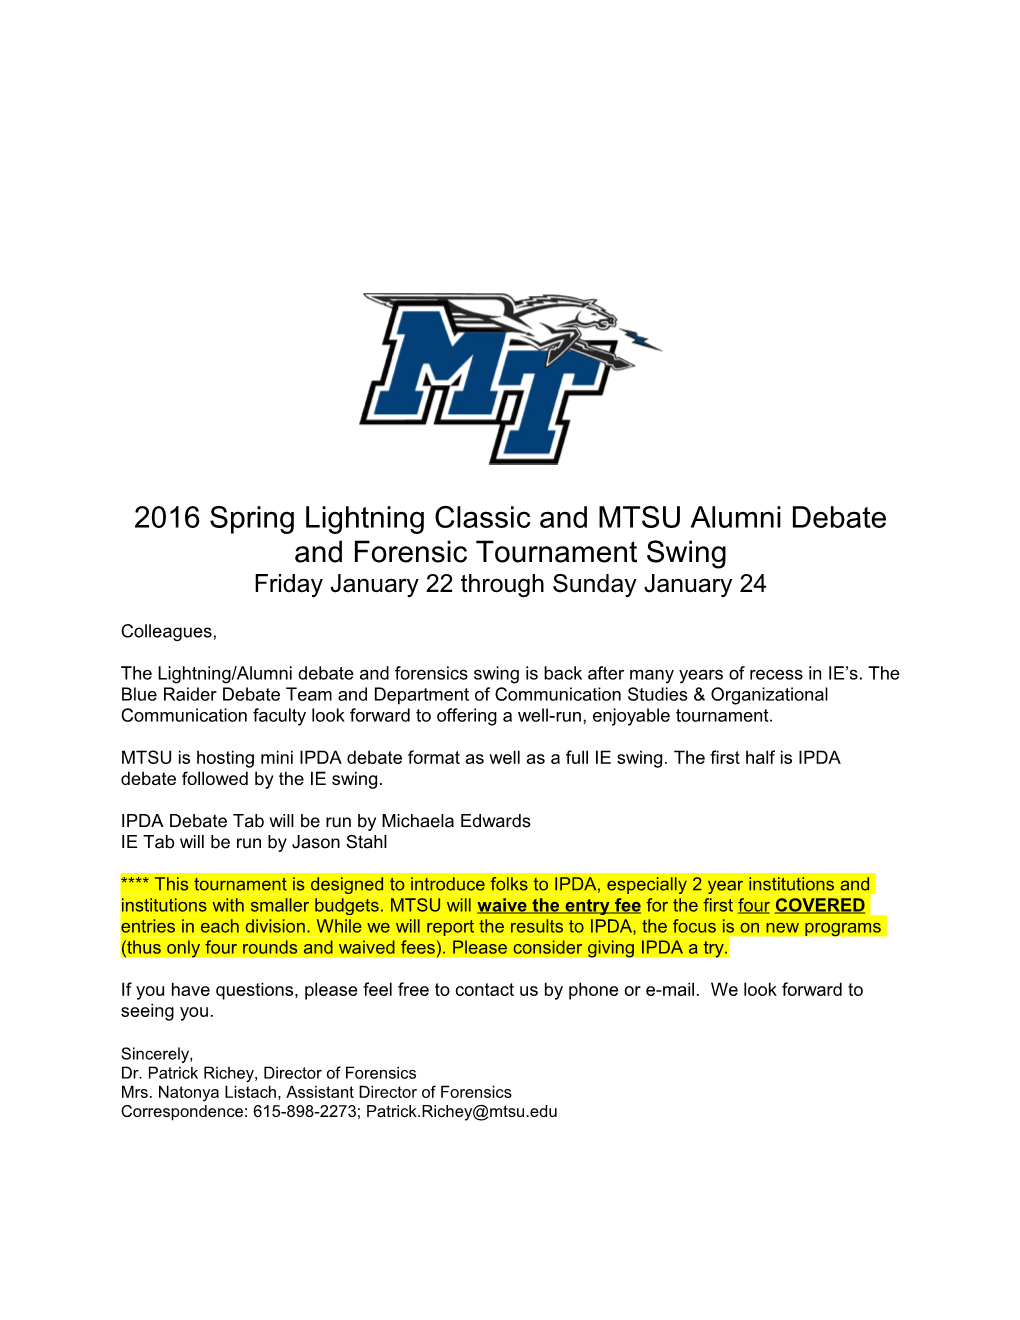 2016Spring Lightning Classicand MTSU Alumni Debate and Forensic Tournament Swing